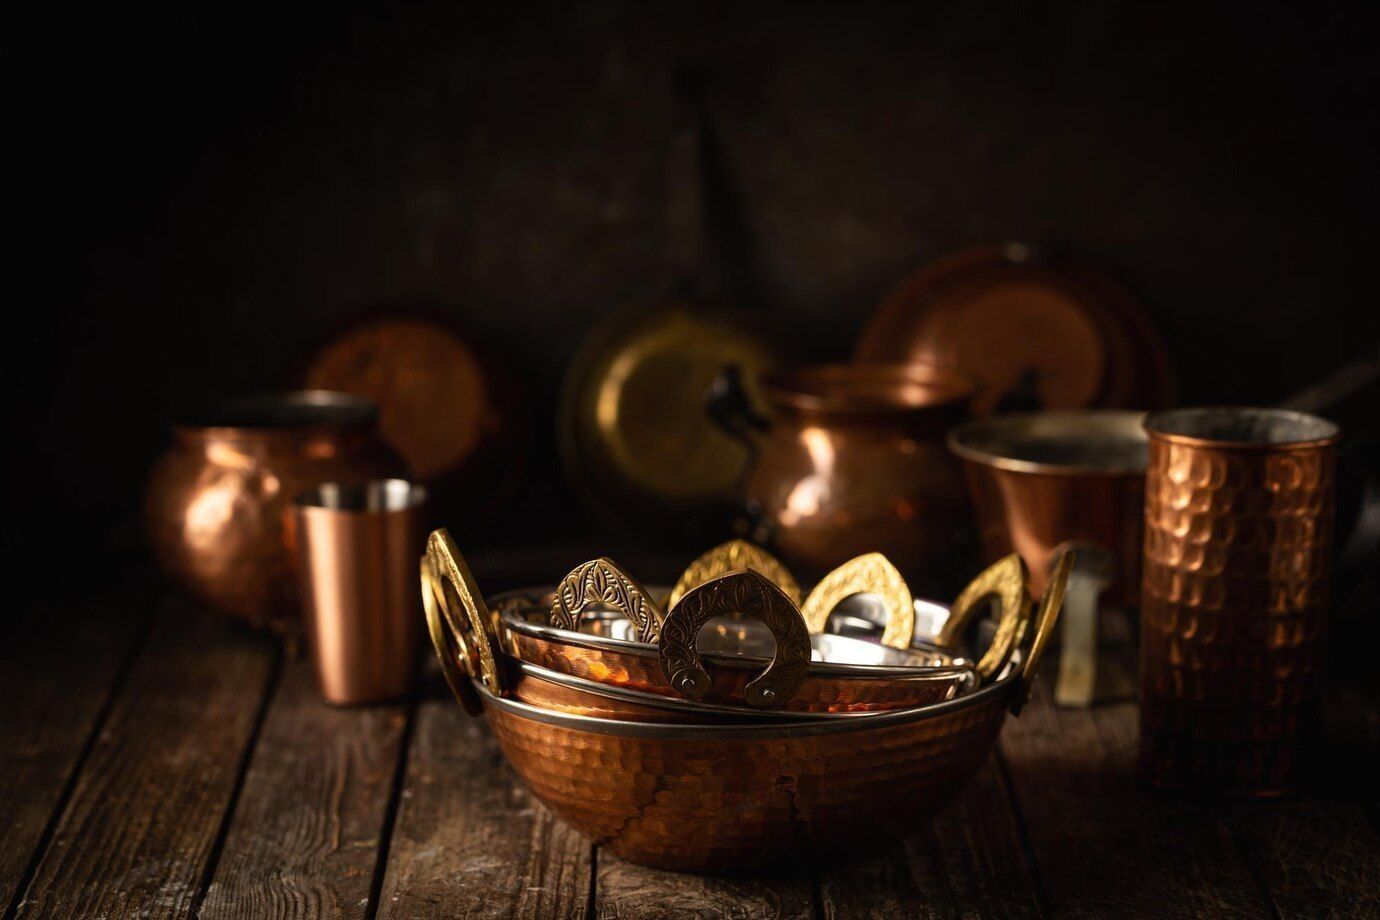 Benefits of Brass Utensils: Revamp your kitchen with Brass Vessels